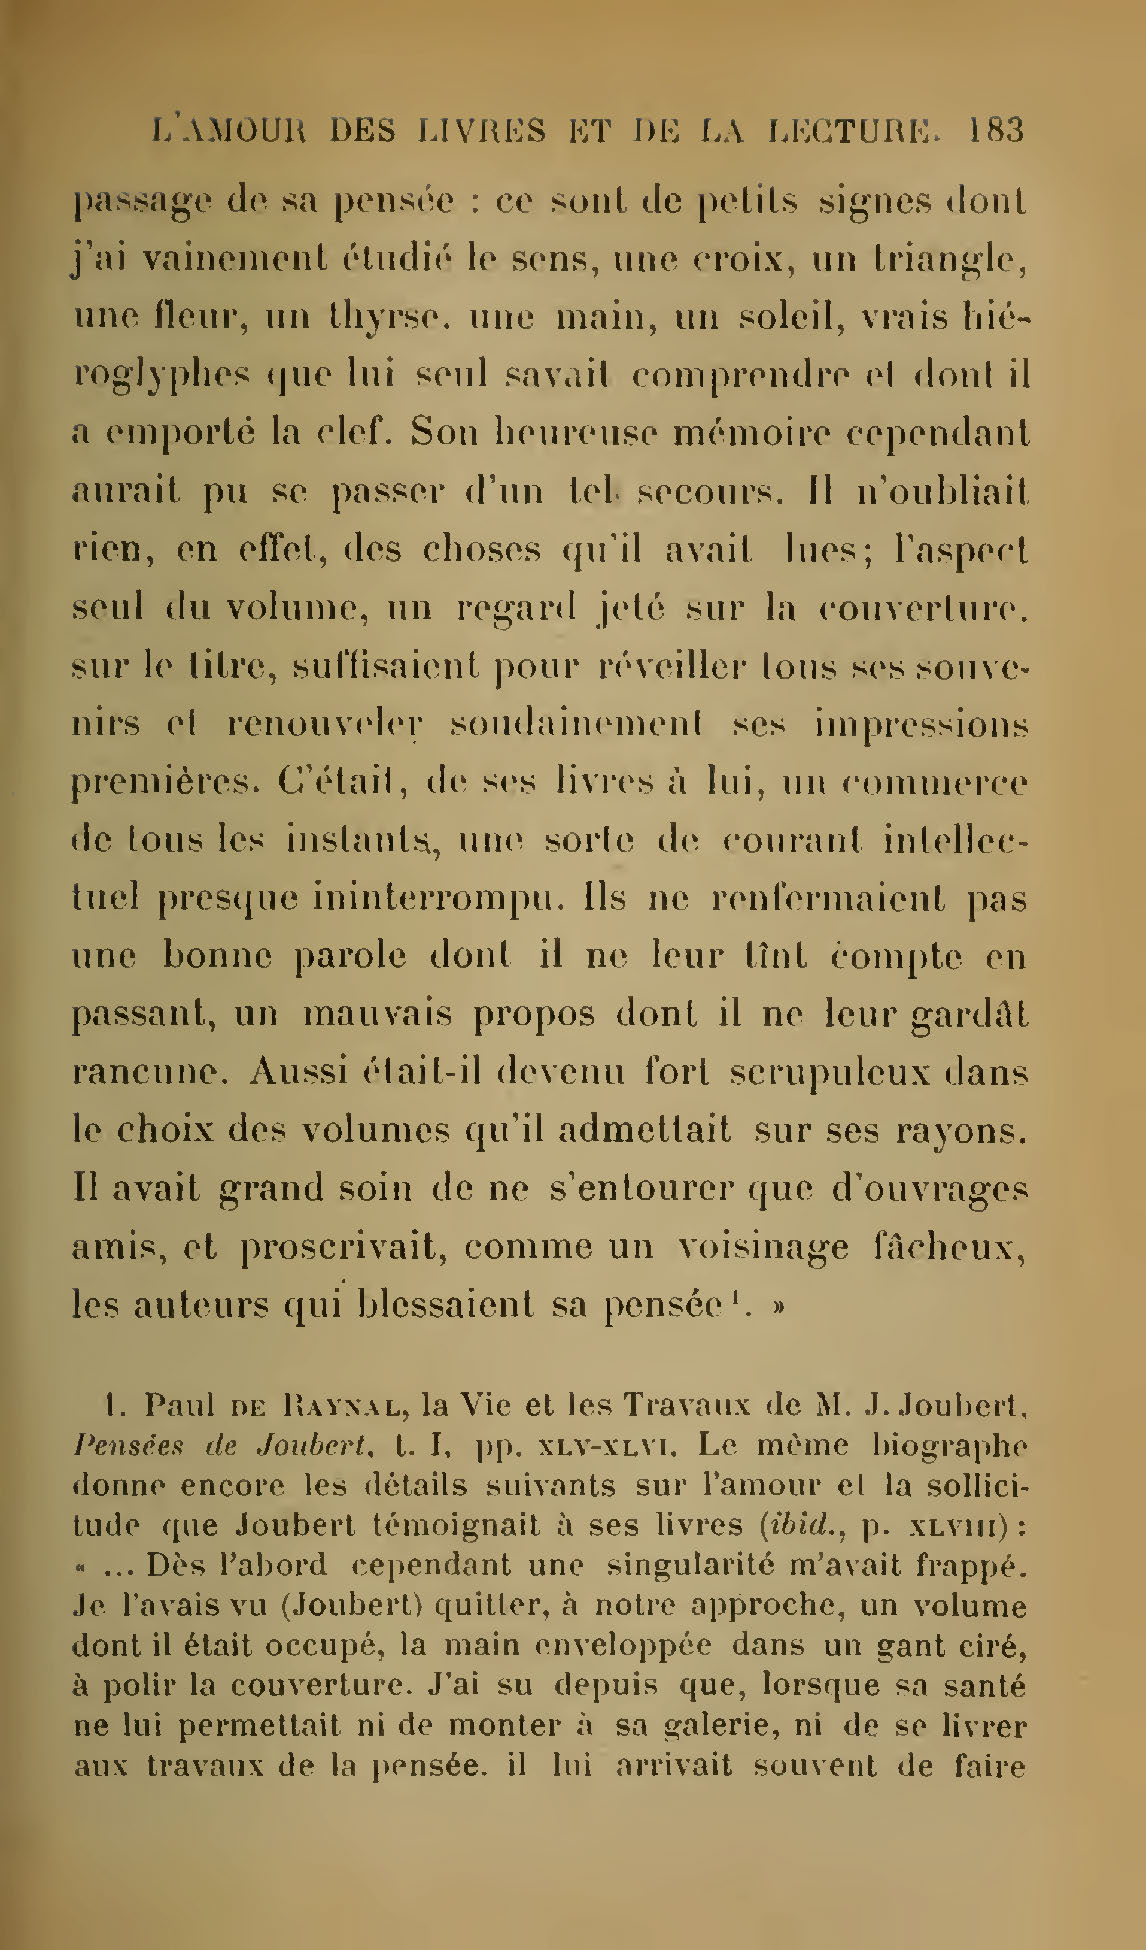 Albert Cim, Le Livre, t. I, p. 183.